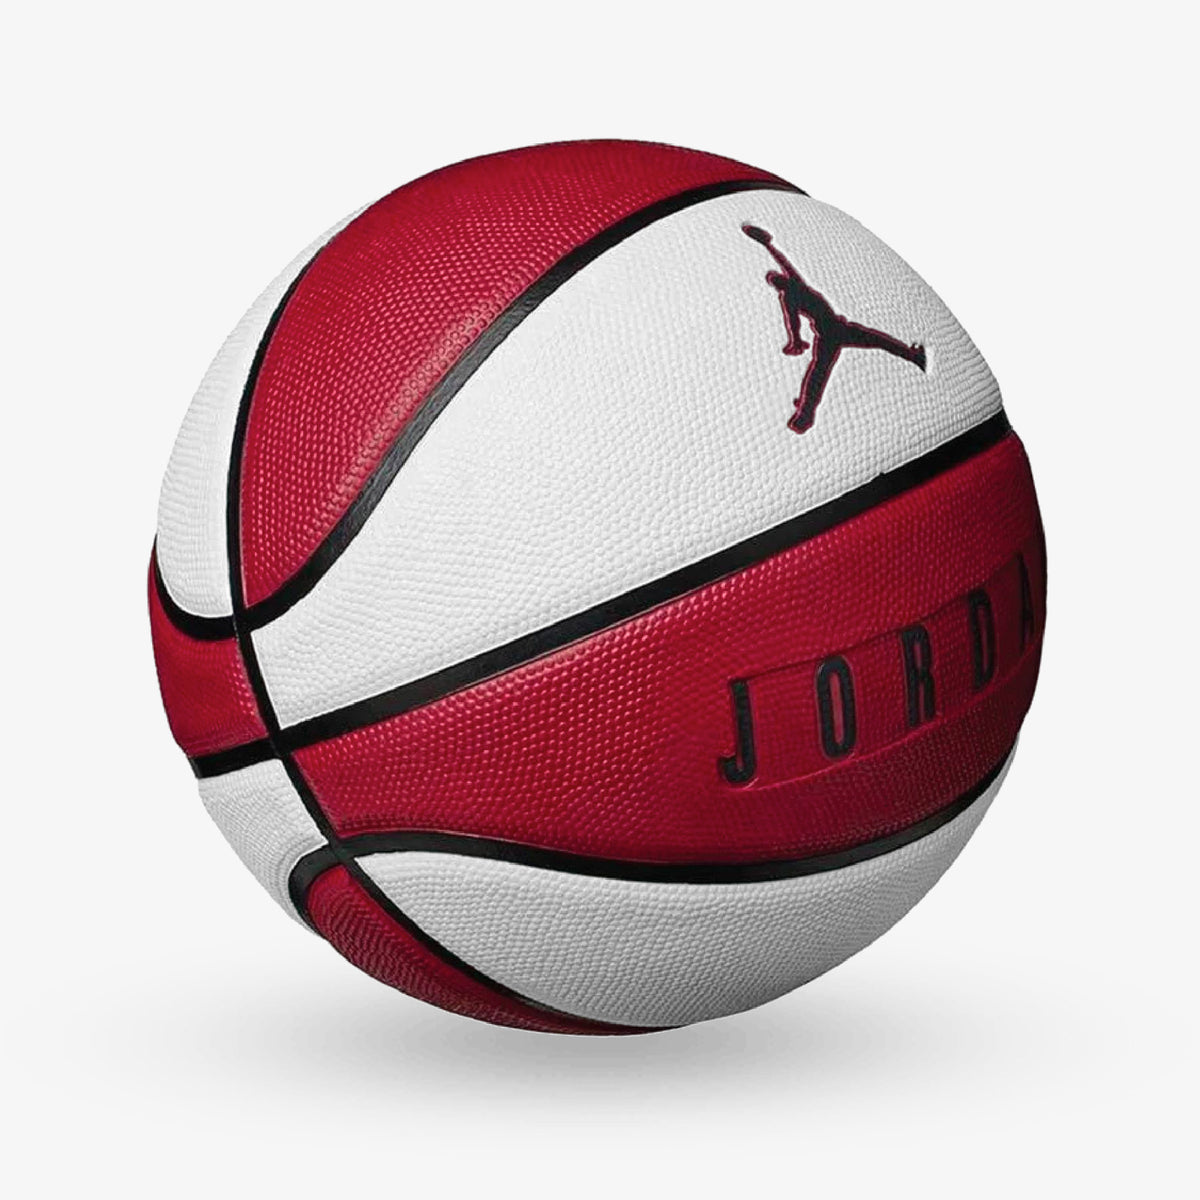 Jordan Playground Basketball - Gym Red - Size 7